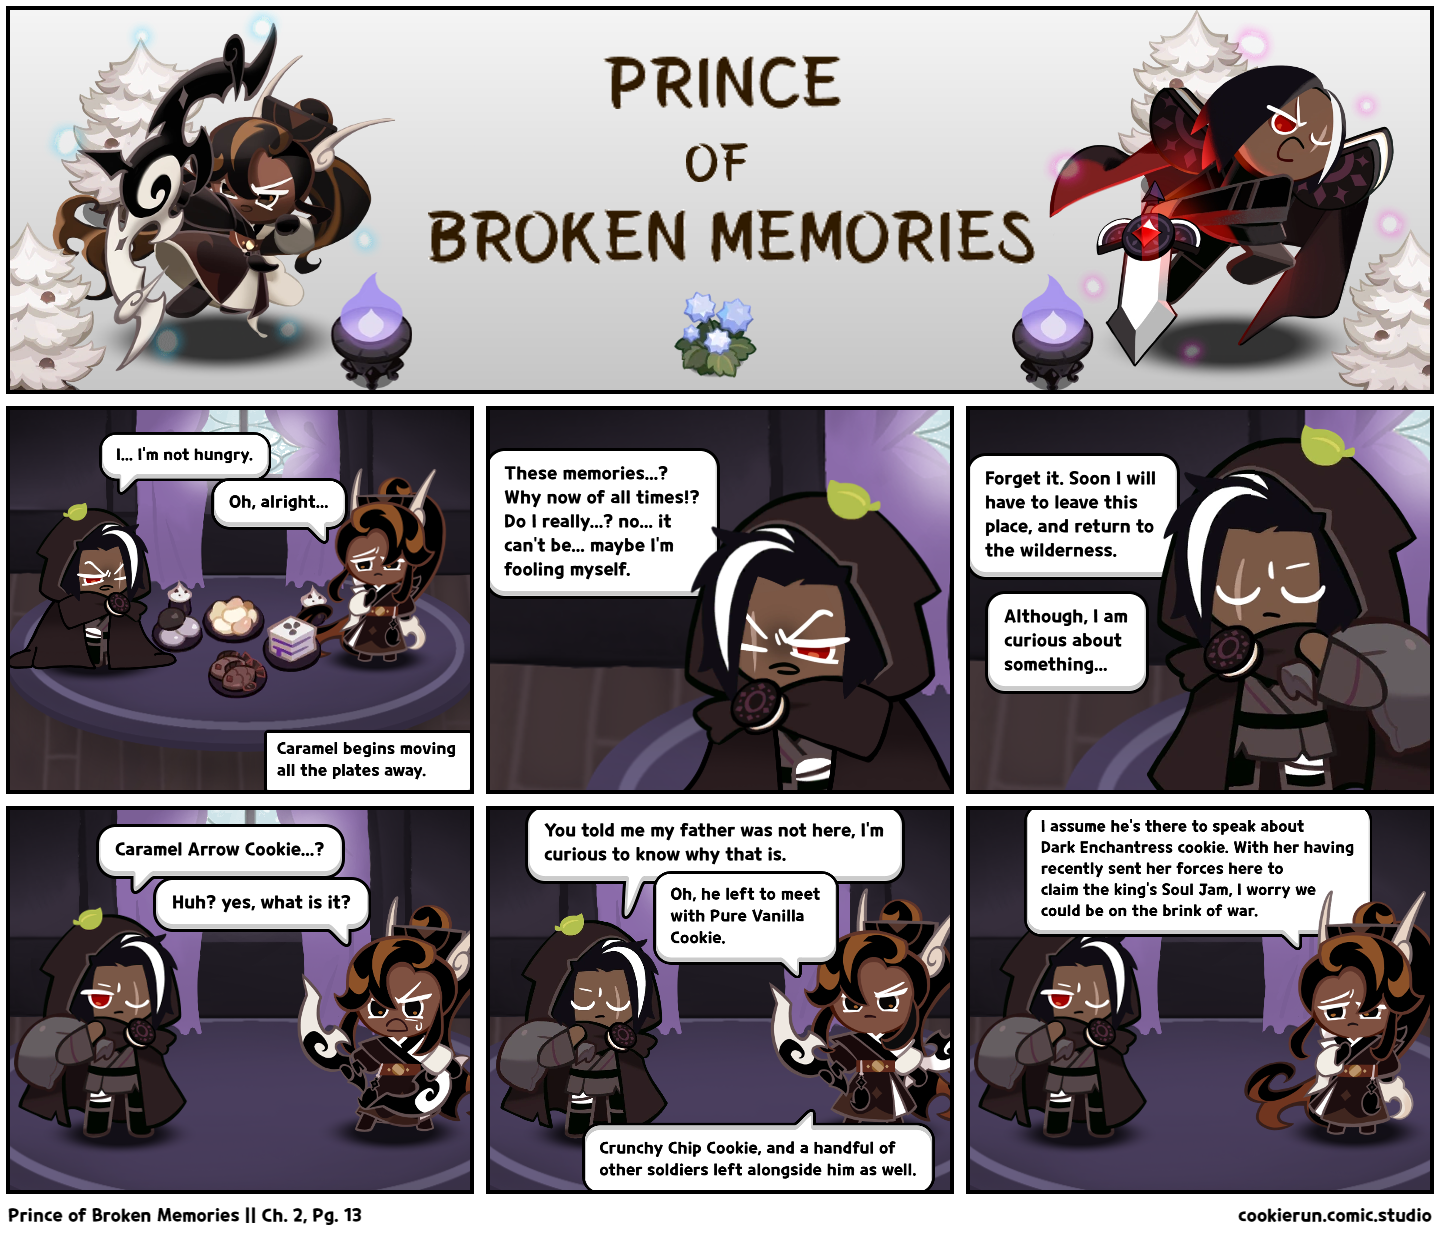 Prince of Broken Memories || Ch. 2, Pg. 13